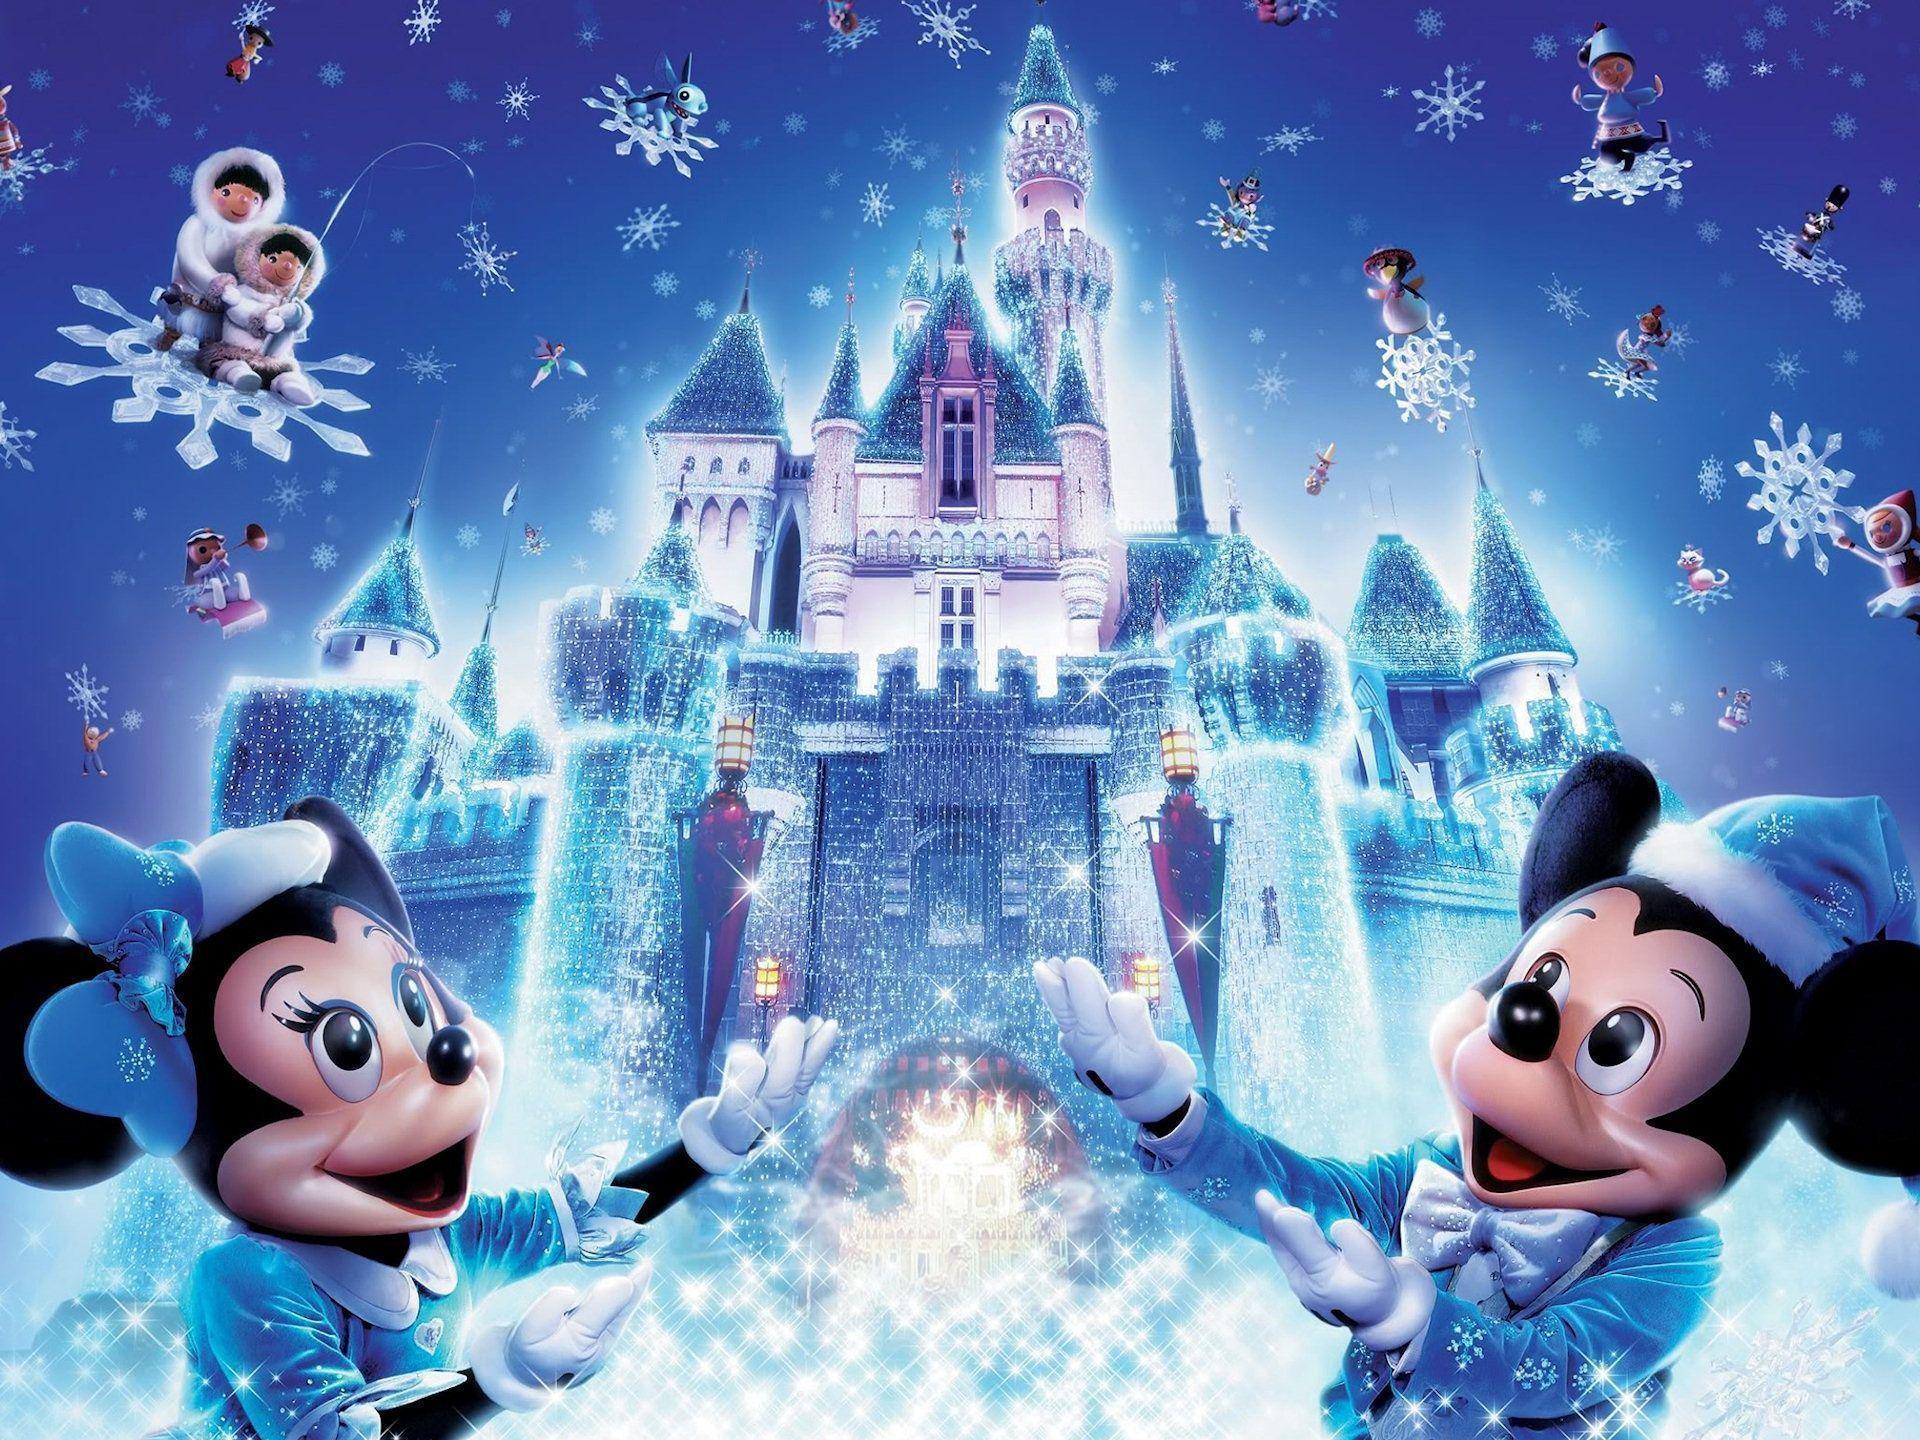 Disney Christmas Background For Desktop Image & Picture